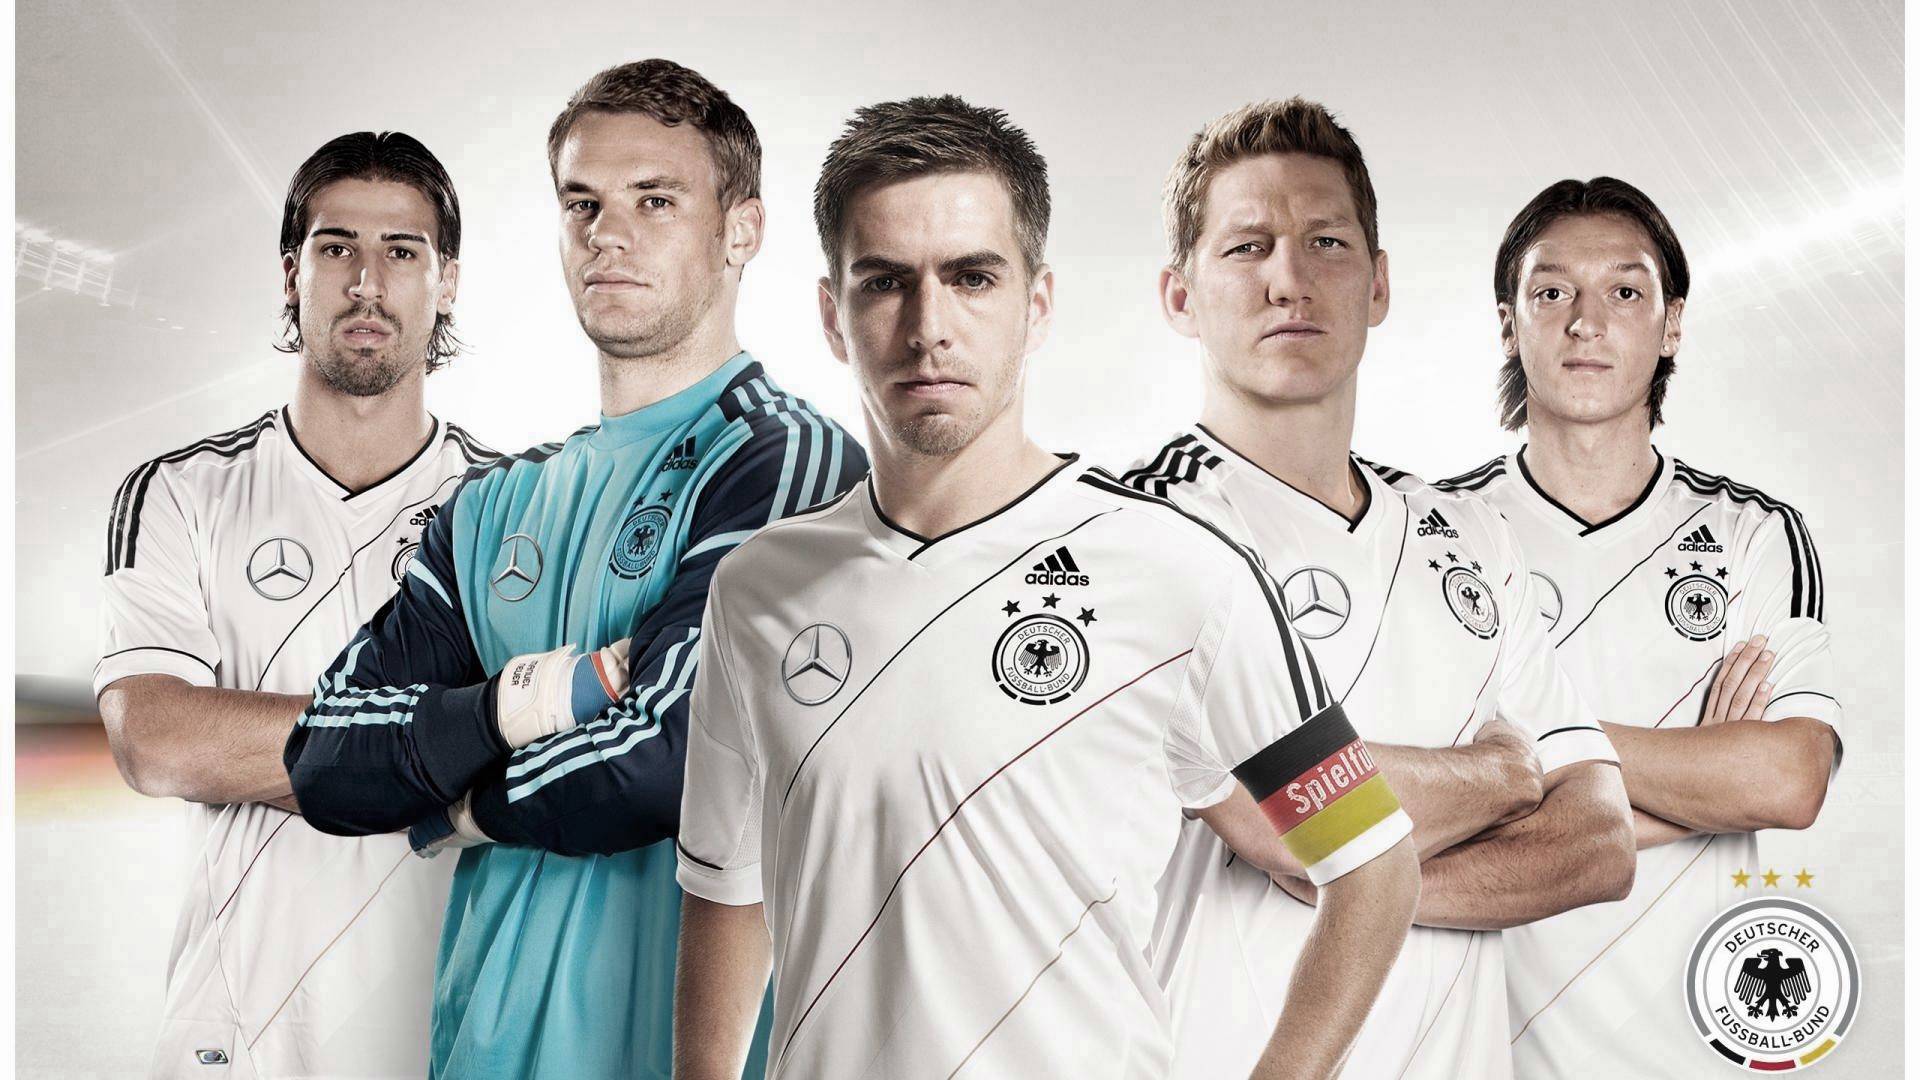 Germany National Football Team 2012 Wallpaper. Football